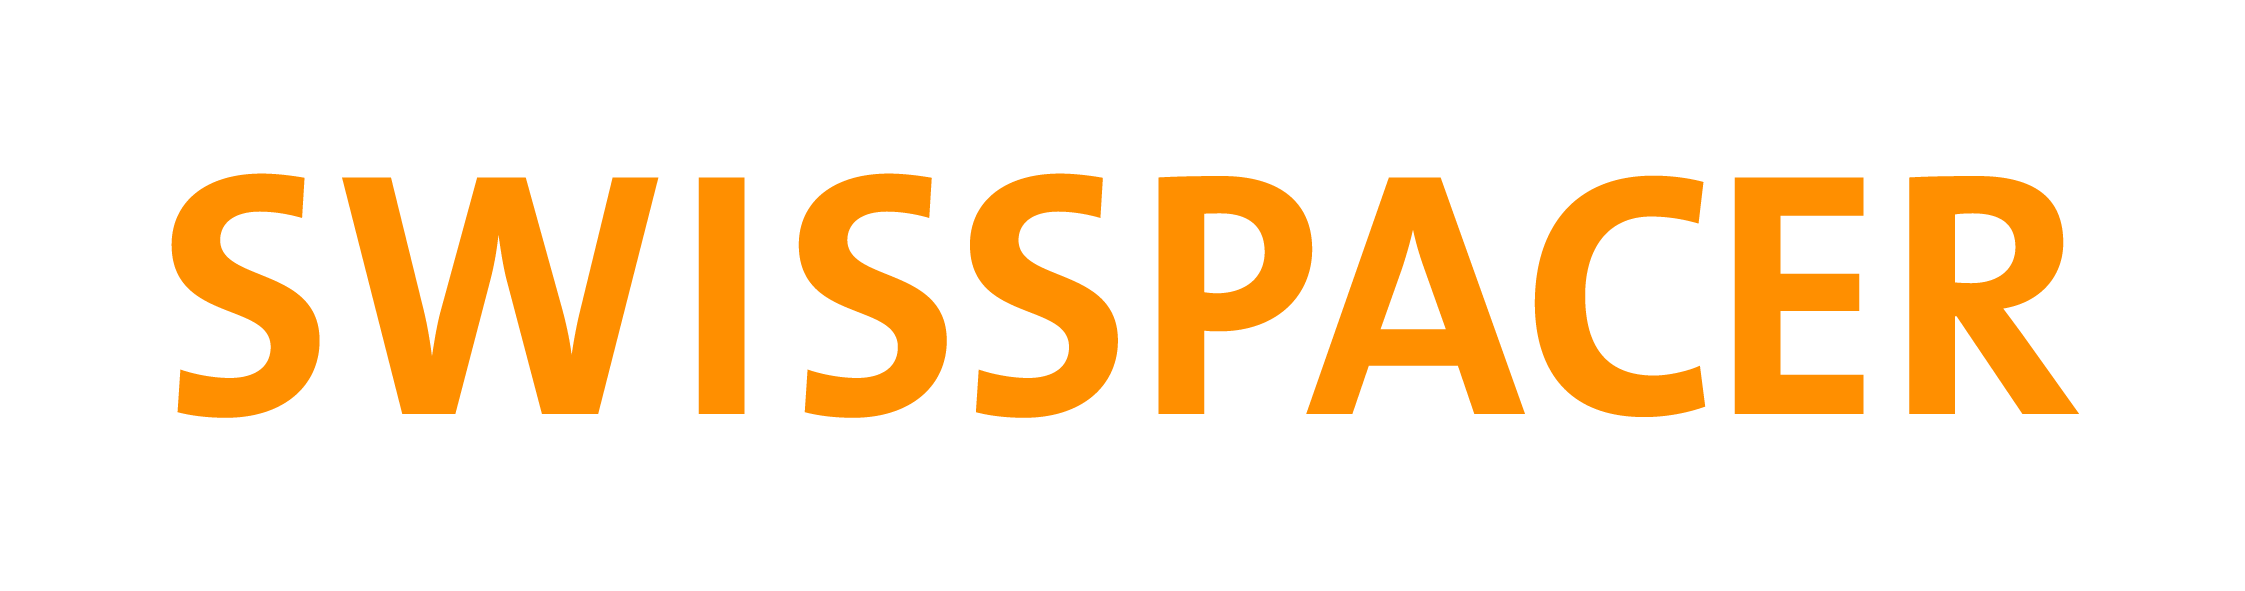 SWISSPACER Logo Orange RGB